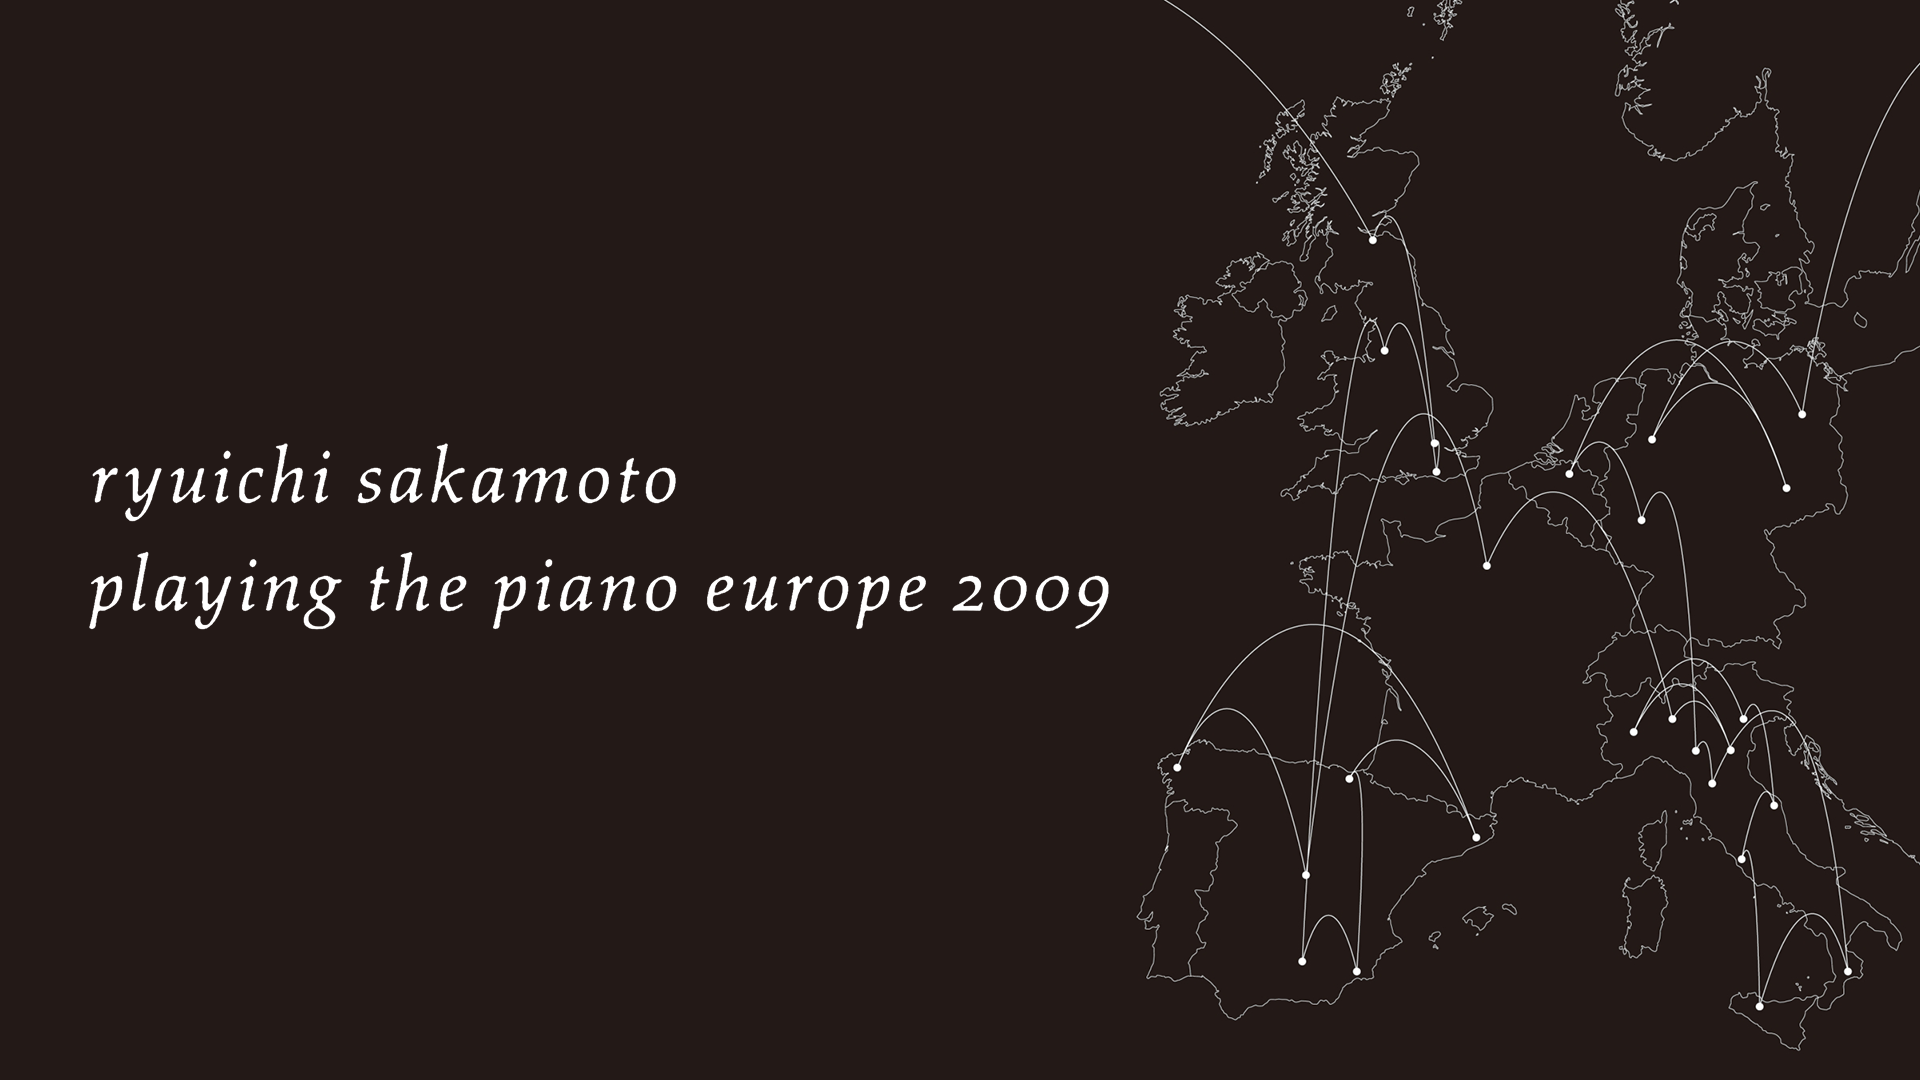 playing the piano europe 2009(音楽・アイドル / 2011) - 動画配信 | U-NEXT 31日間無料トライアル